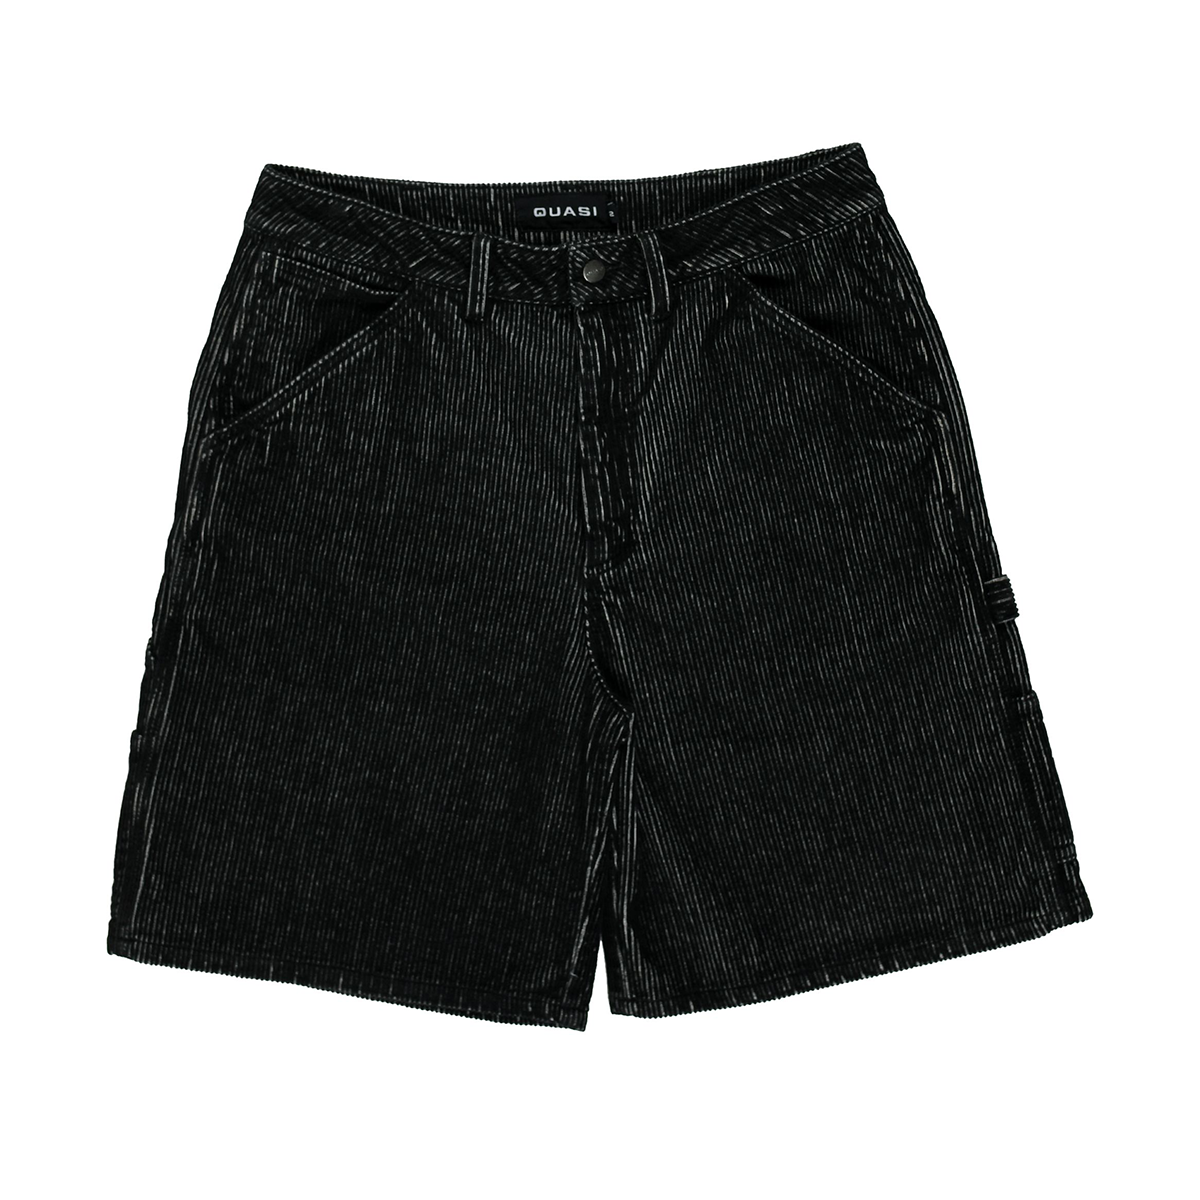 Quasi Canyon Shorts - Black